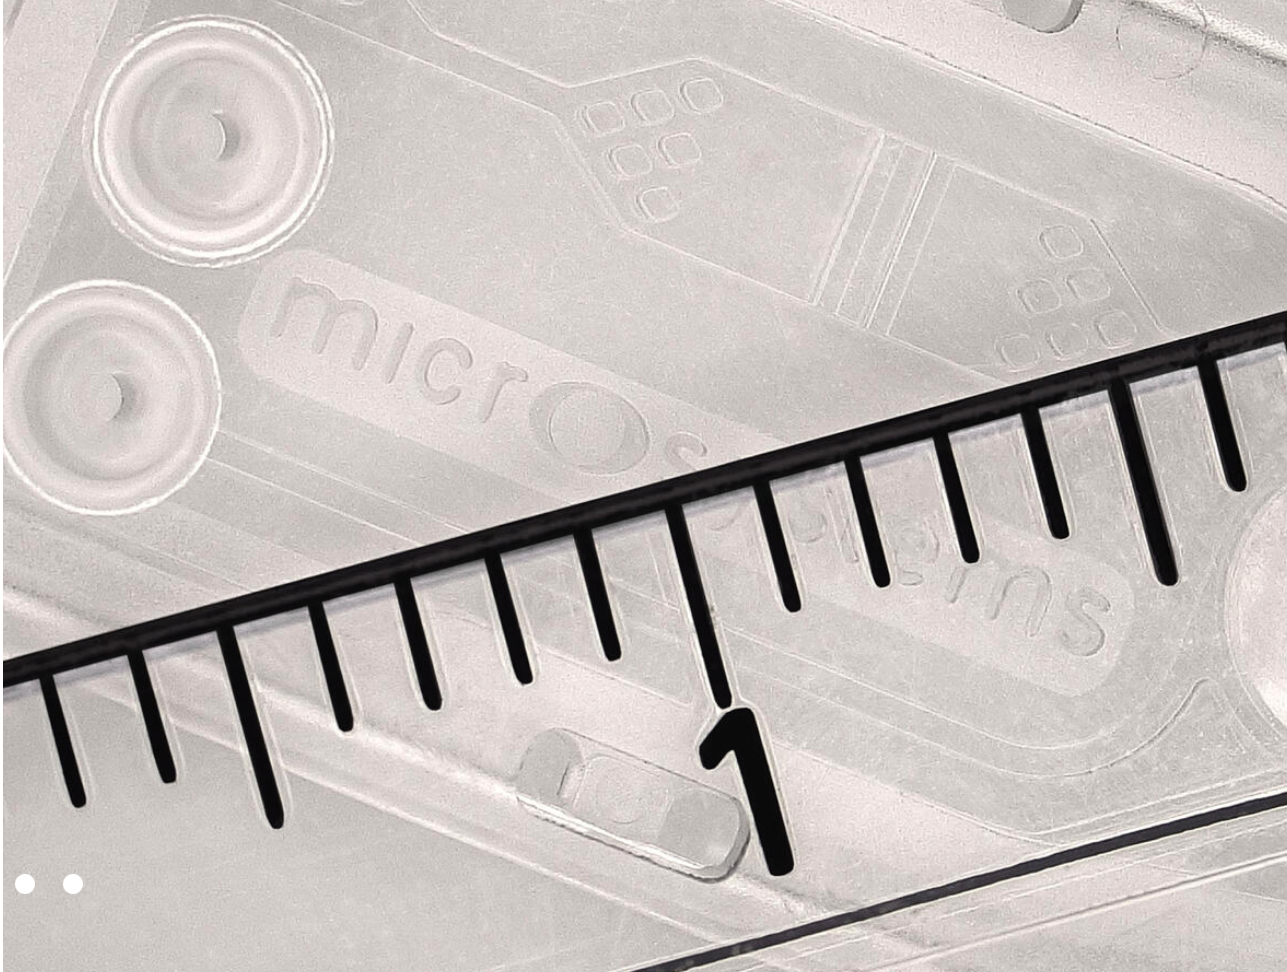 microfluidics lab on a chip